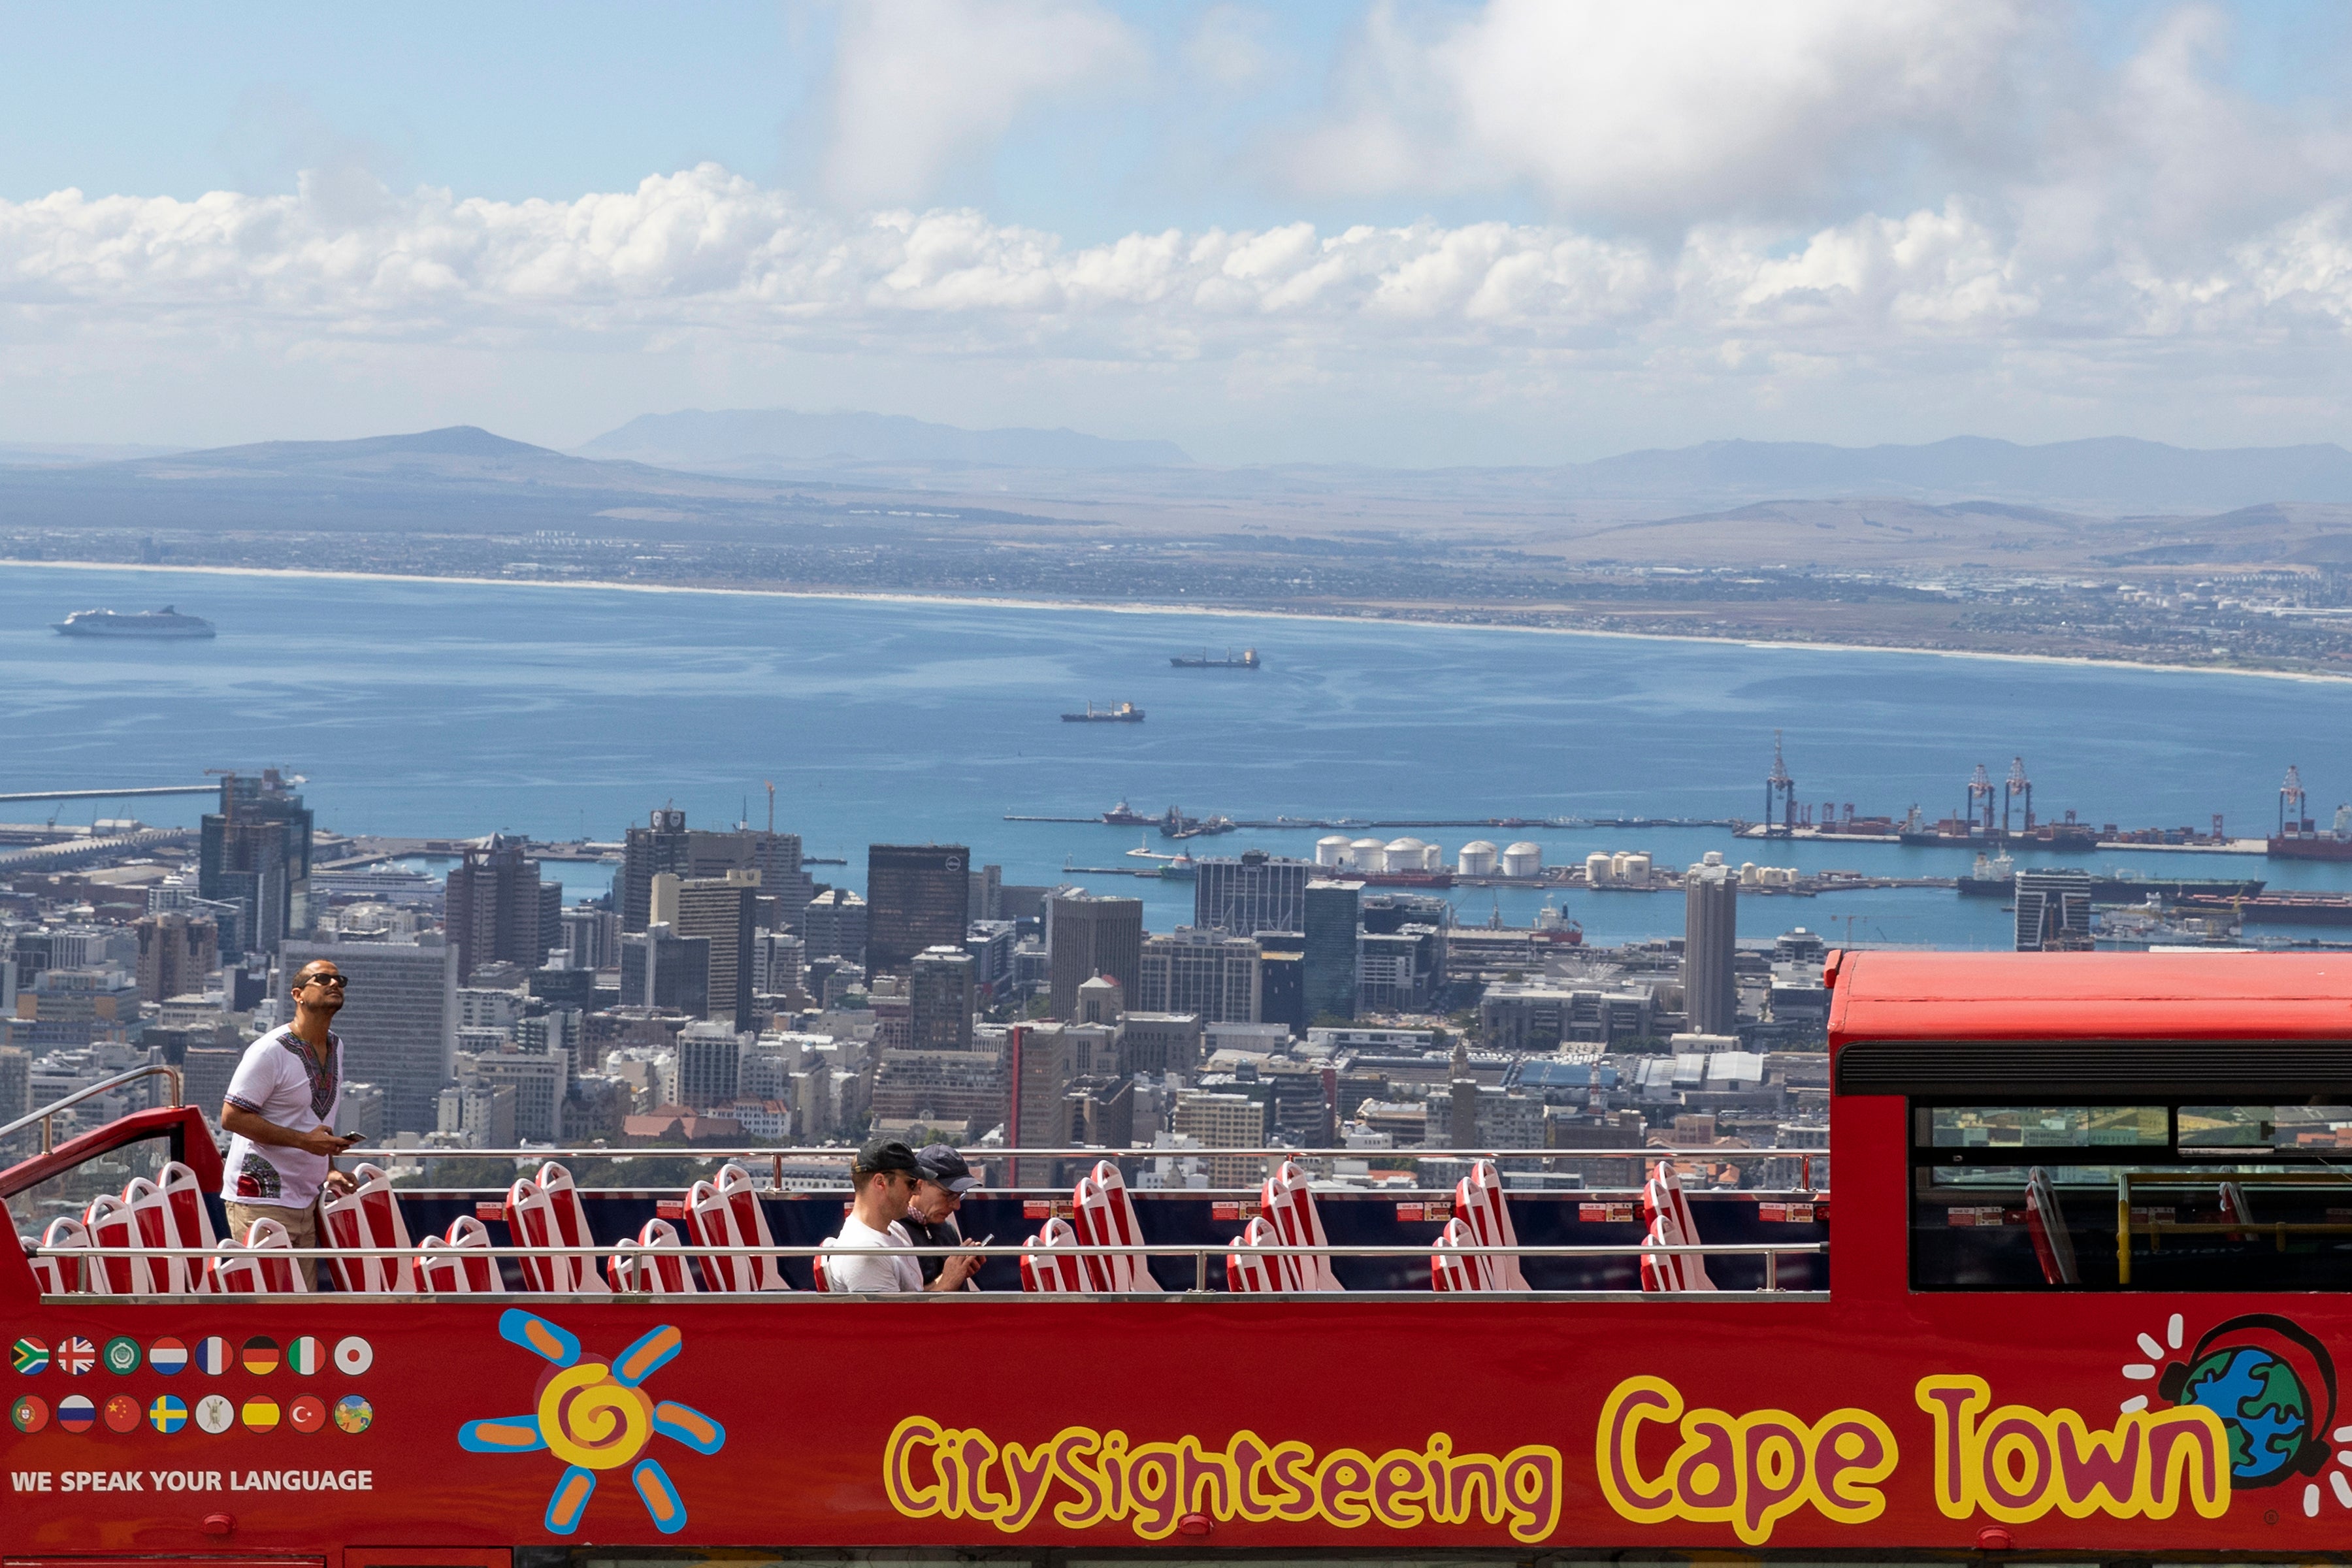 An open air double decker bus in Cape Town